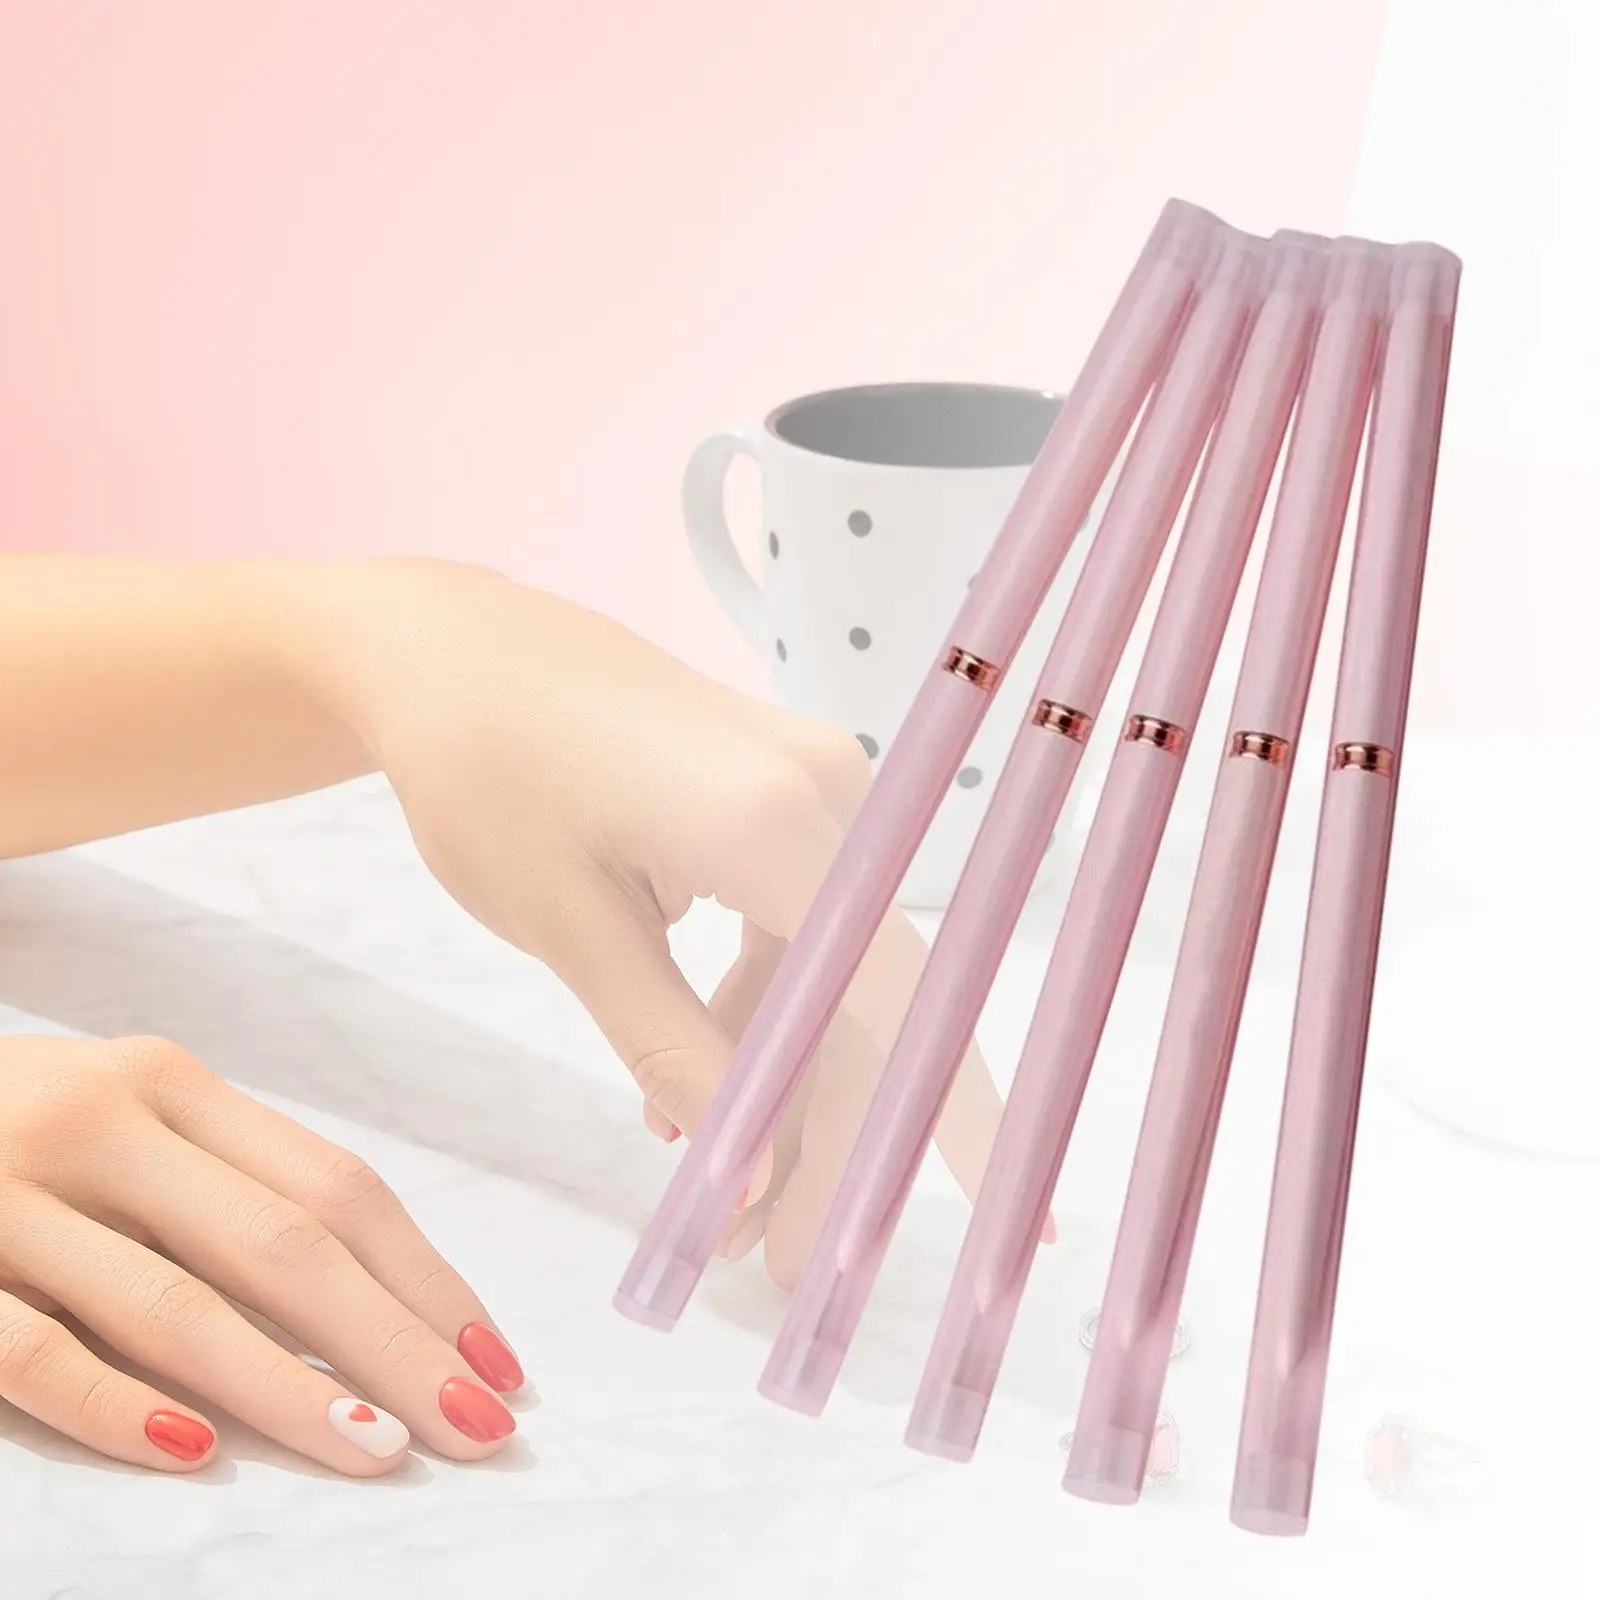 5x Nail Art Liner Brush Set 4 mm-25mm for Long Lines Nail Painting Drawing